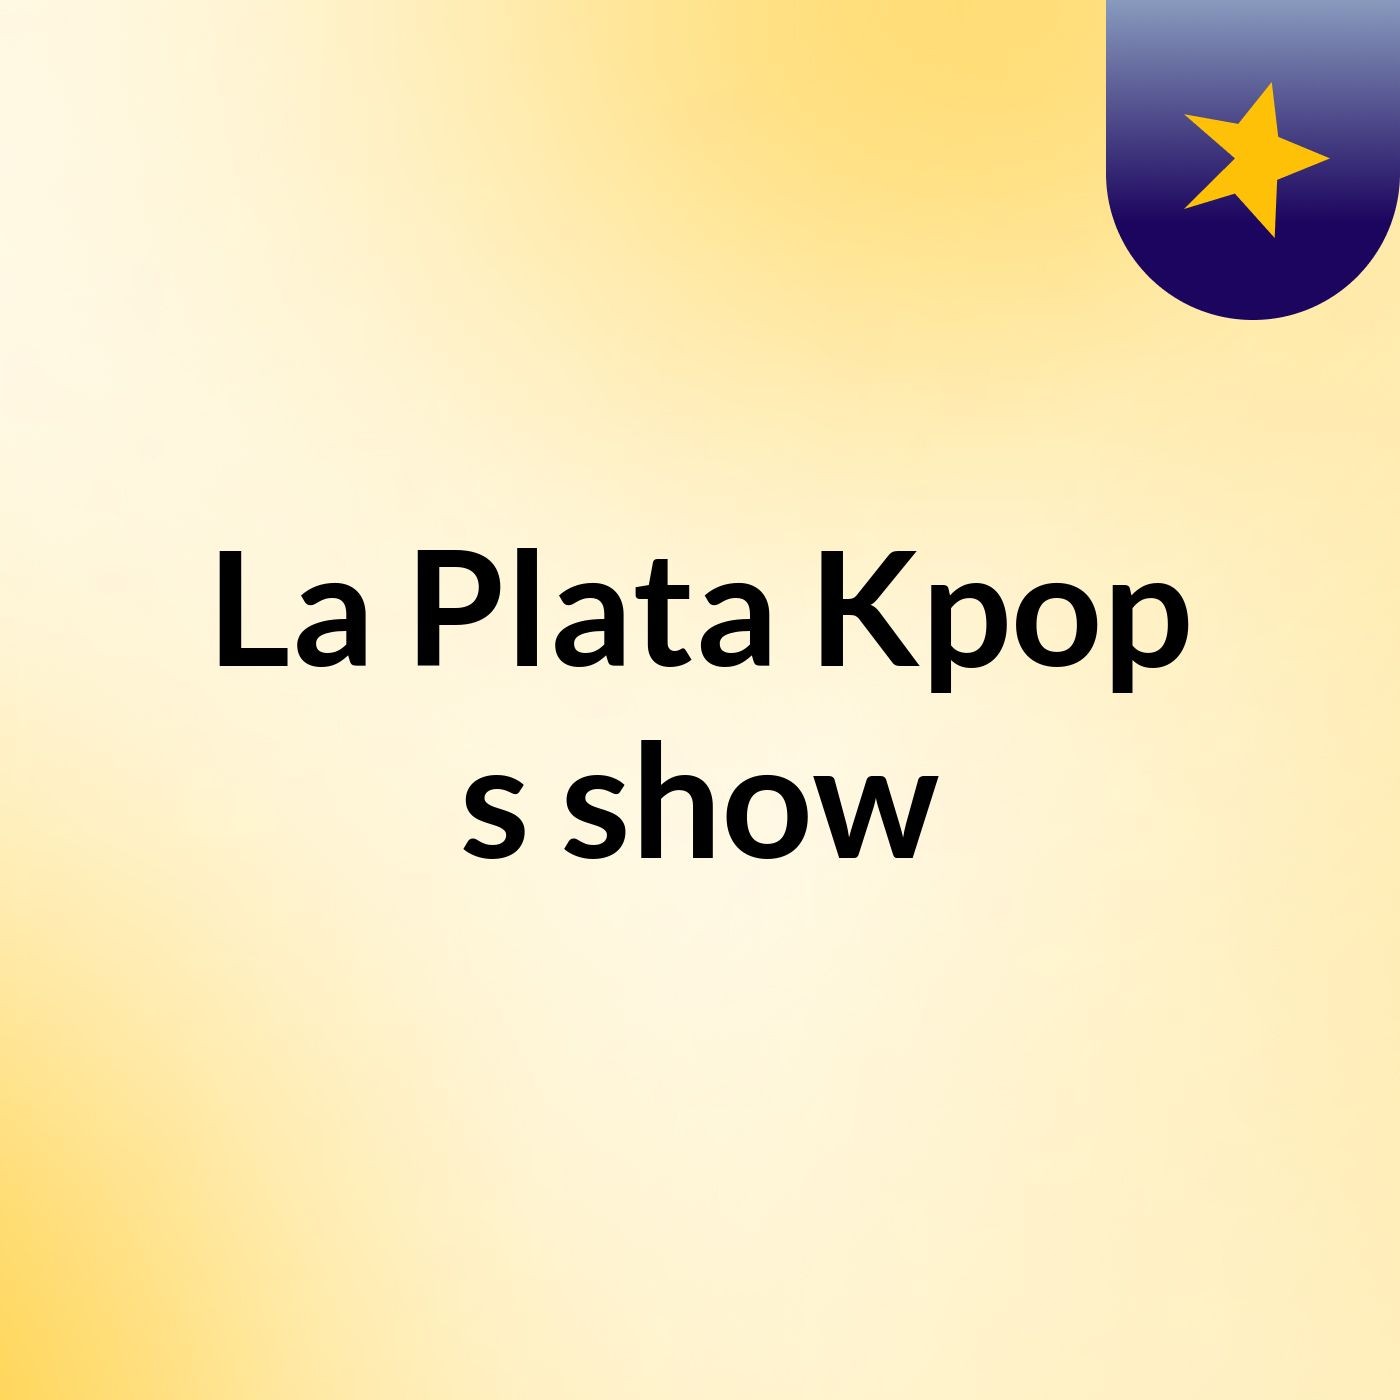 La Plata Kpop's show